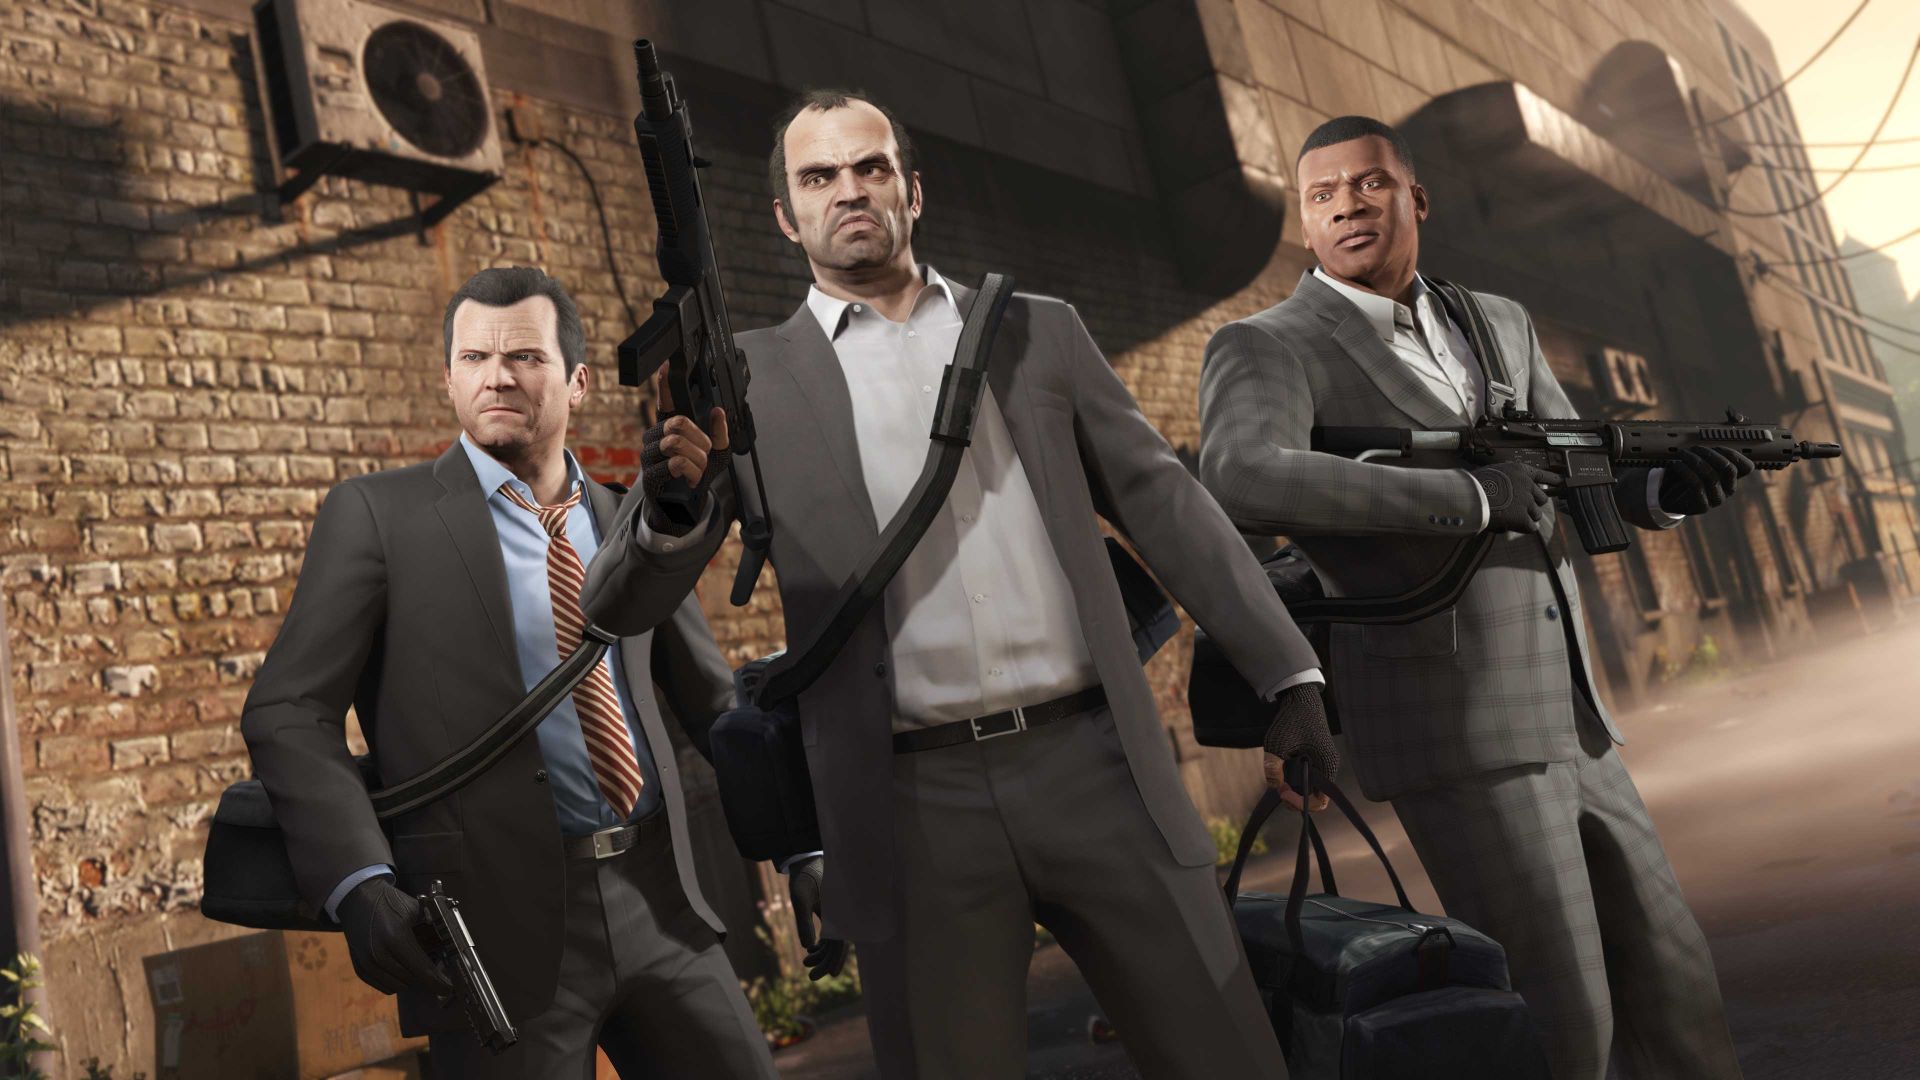 Grand Theft Auto 5 ทำยอดขายตลอดกาลไปแล้ว 165 ล้านชุด